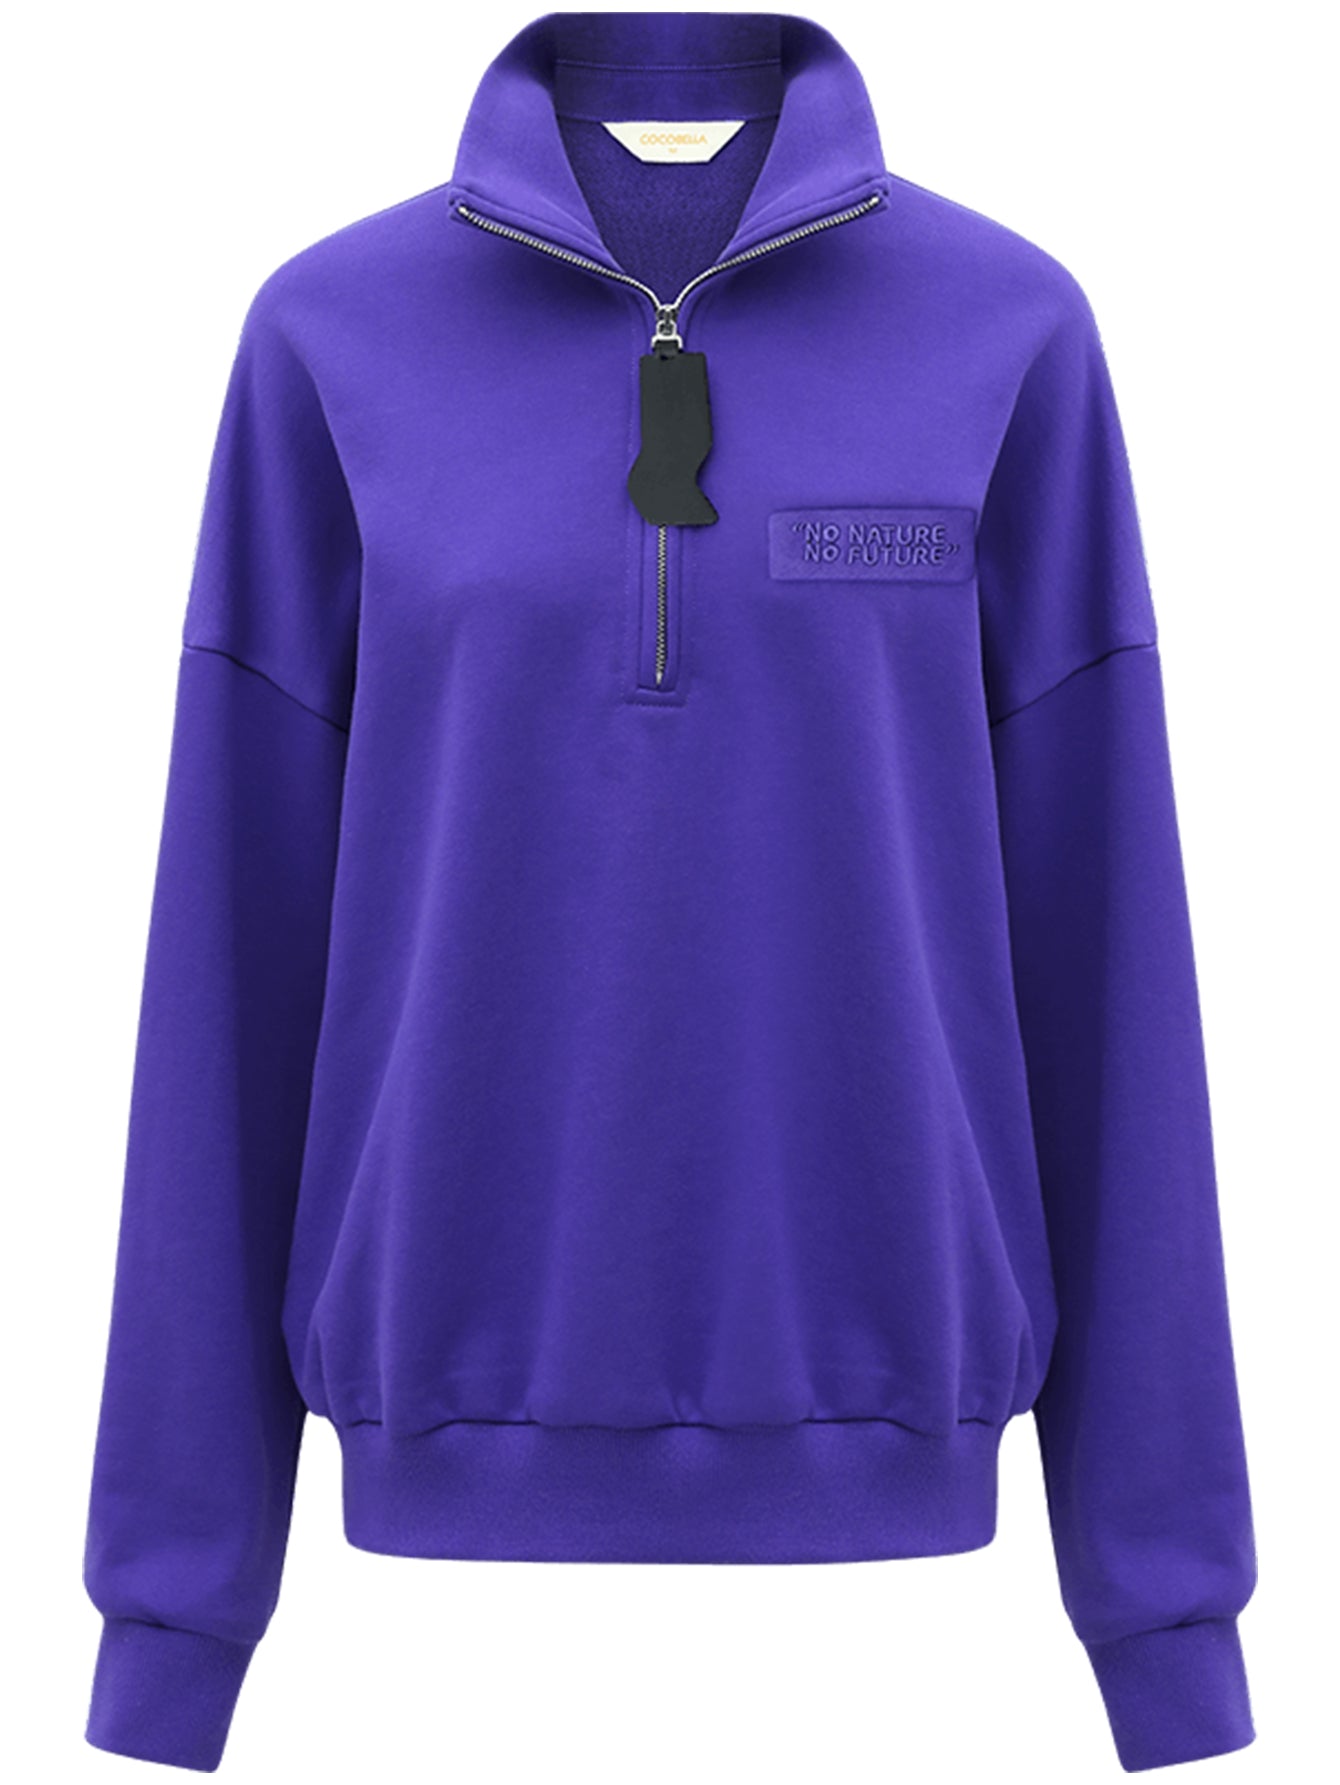 half-zip-drop-shoulder-purple-sweater_all_purple_4.jpg